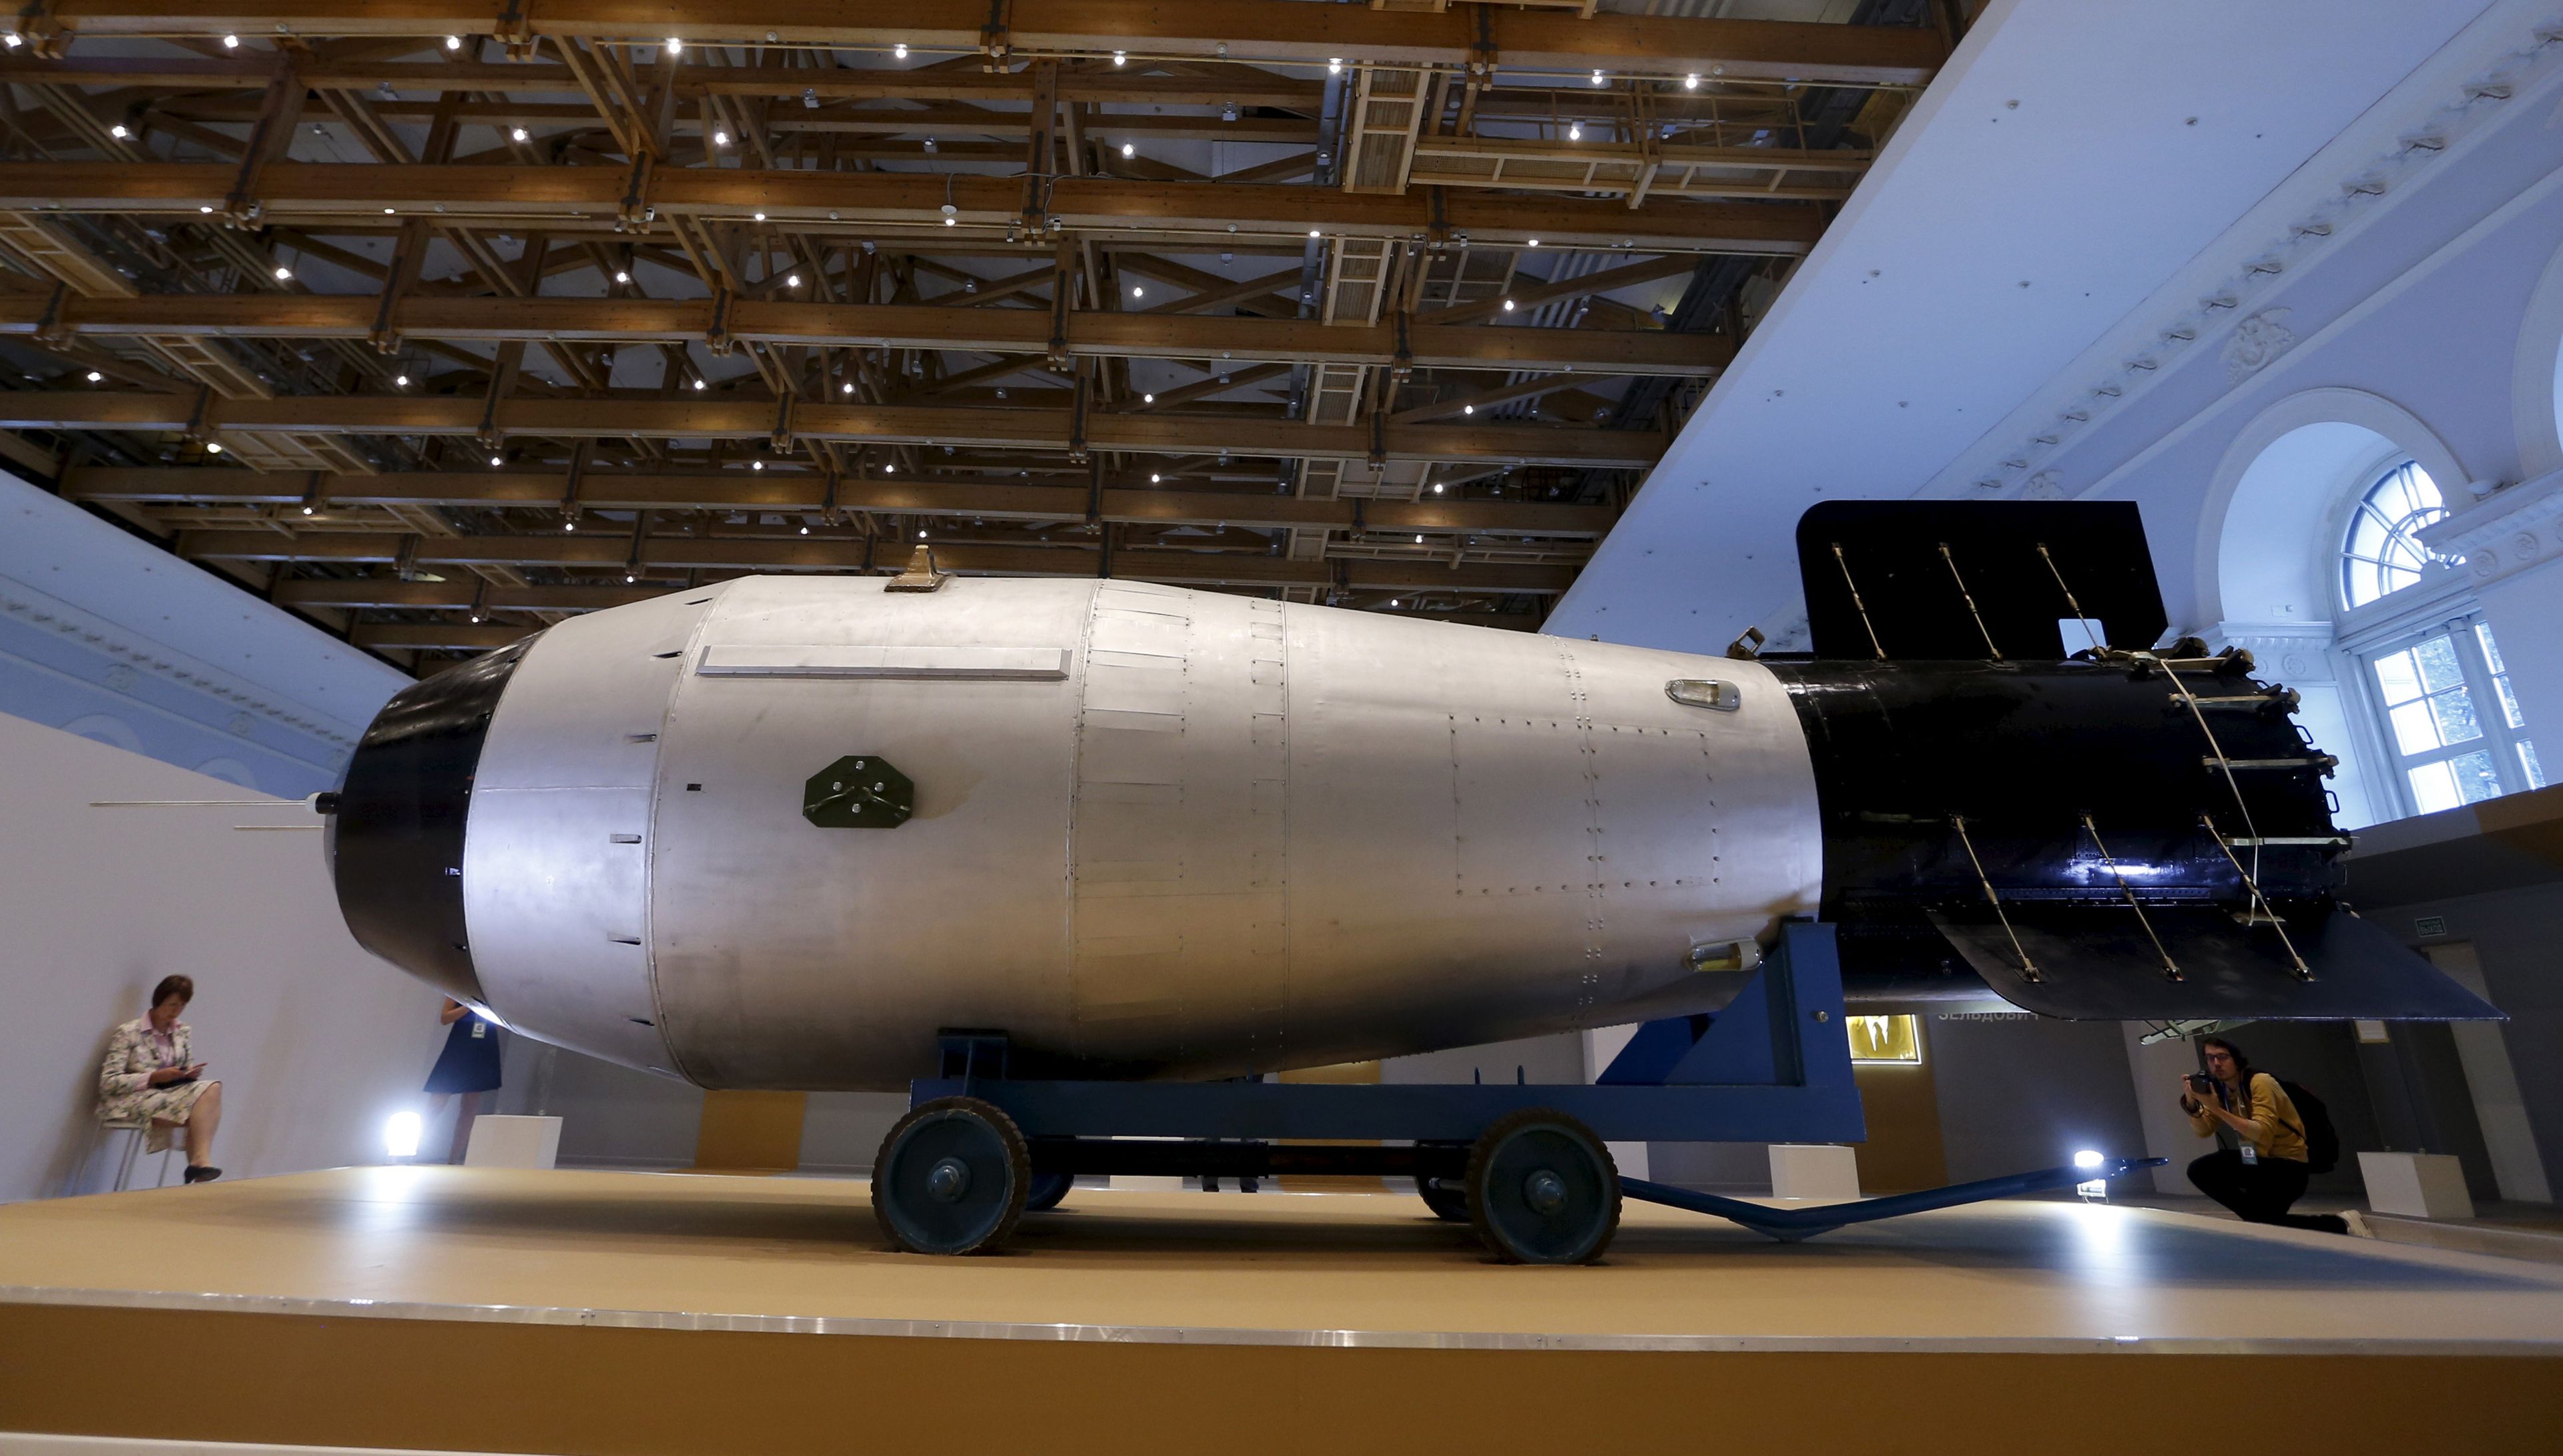 Shell, réplica de la mayor bomba nuclear soviética detonada AN-602